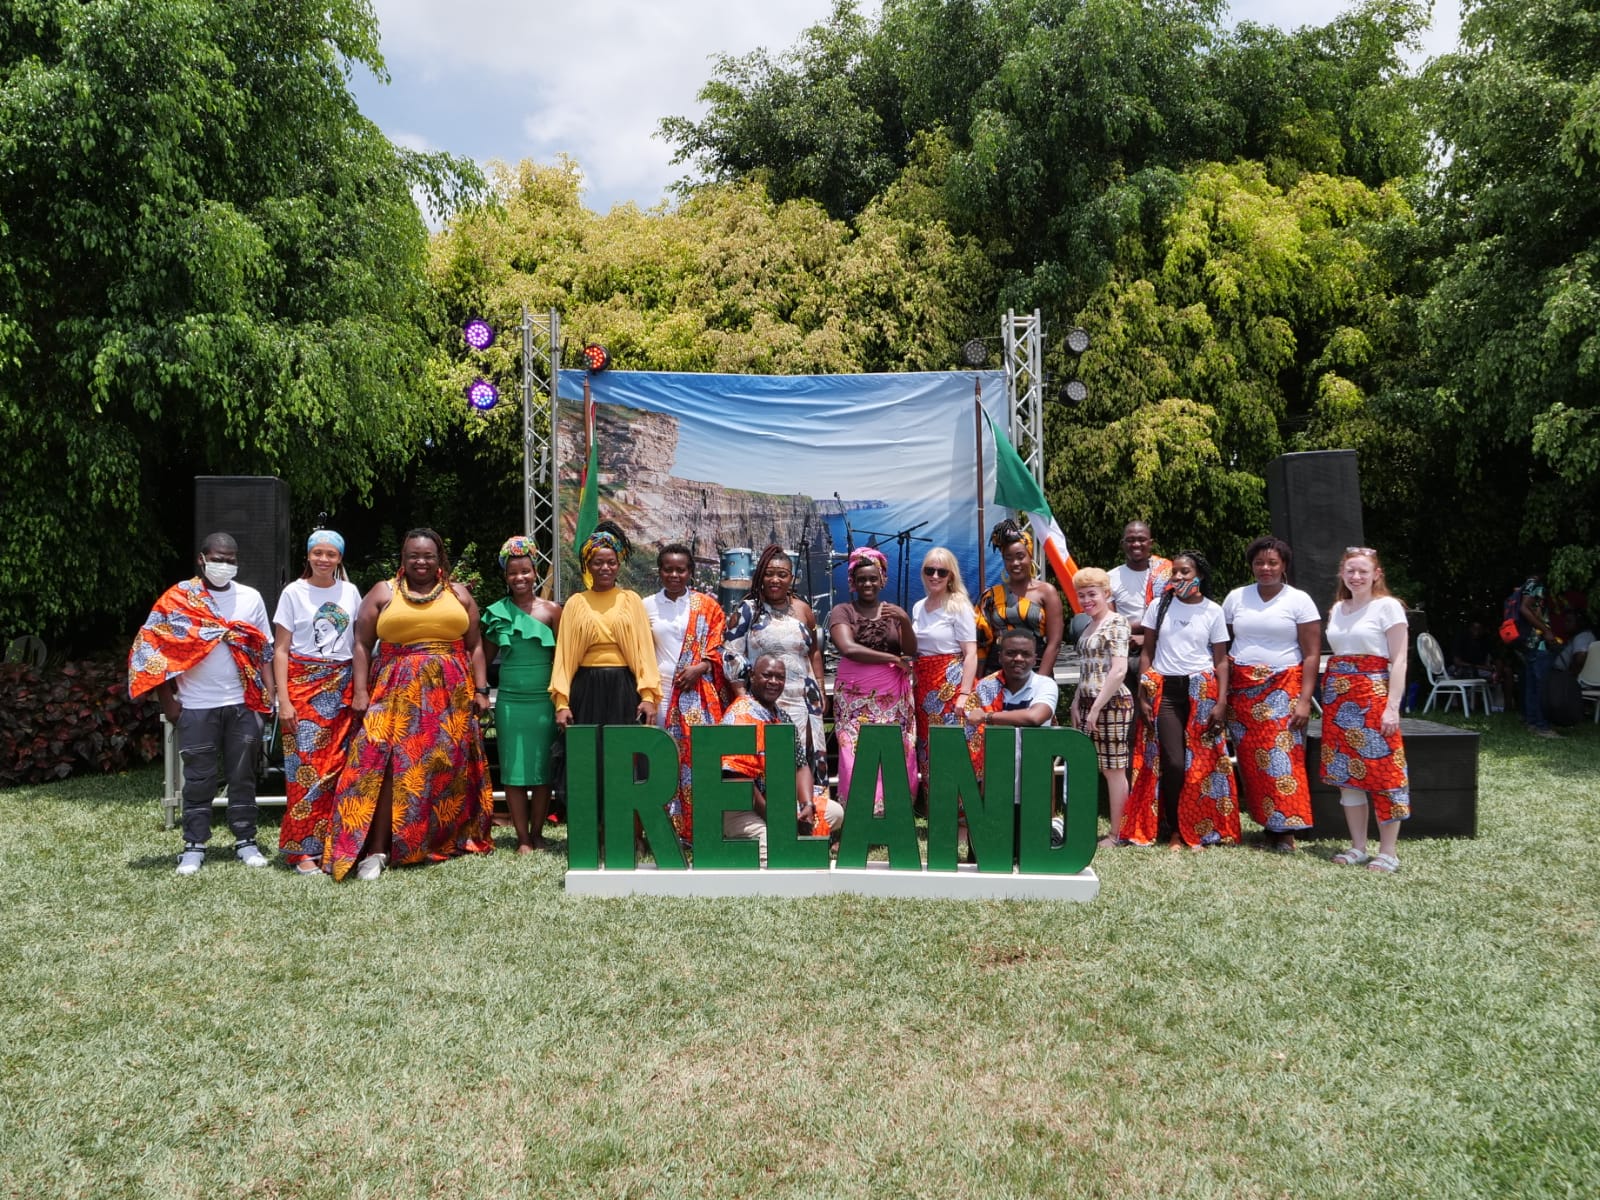 16 Days of Activism against Gender Based Violence campaign in Mozambique